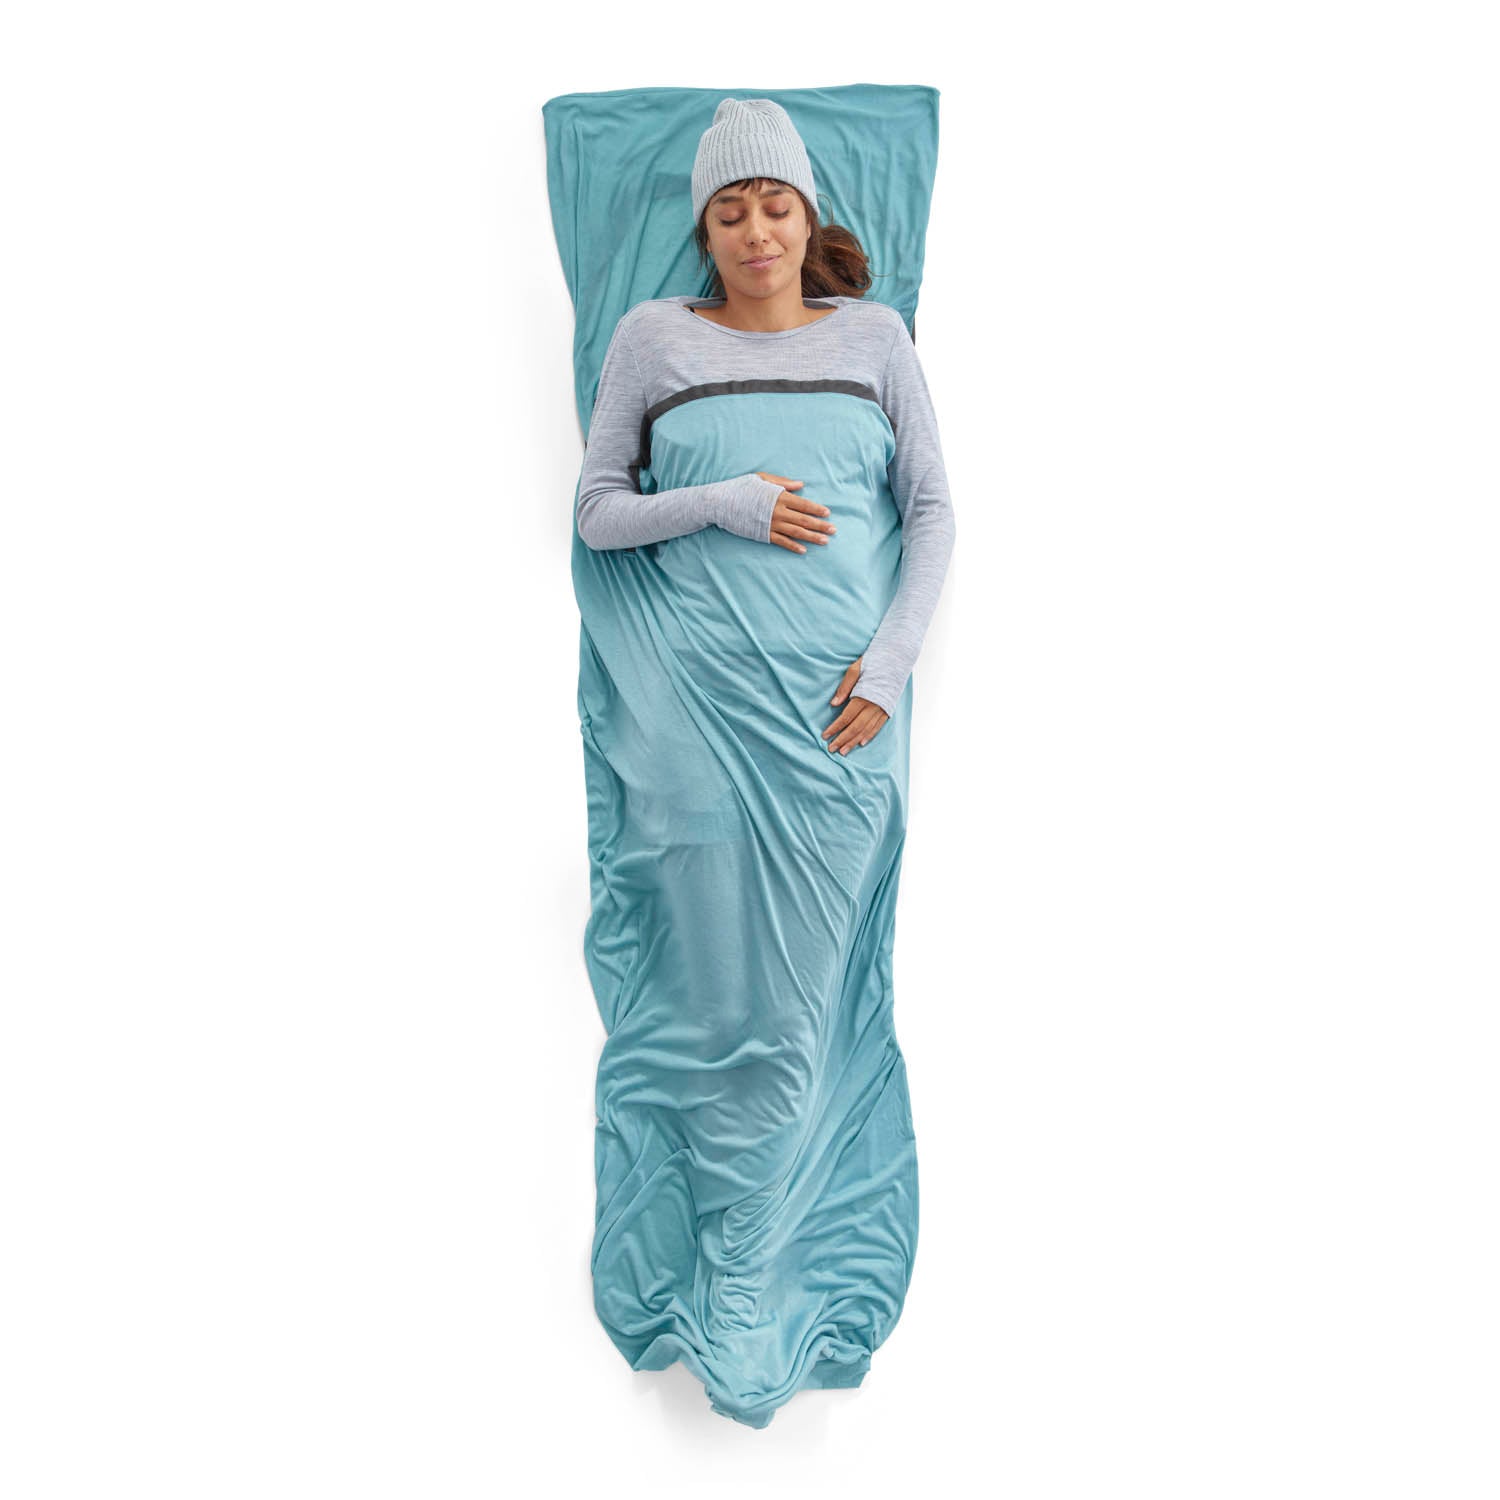 Rectangular with Pillow Sleeve || Comfort Blend Sleeping Bag Liner